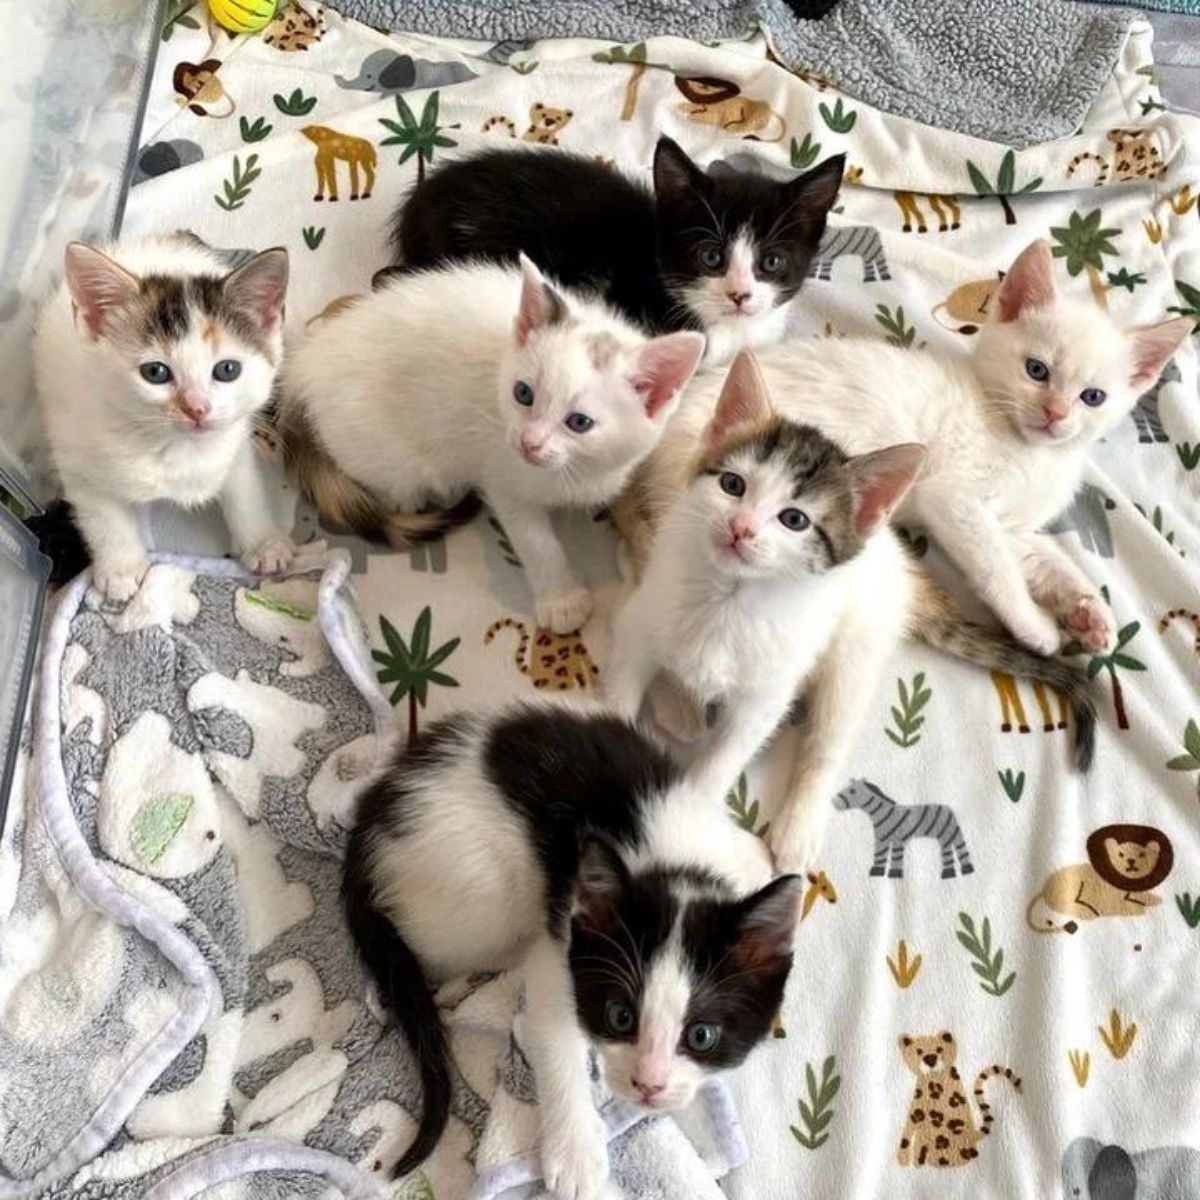 kittens on a blanket